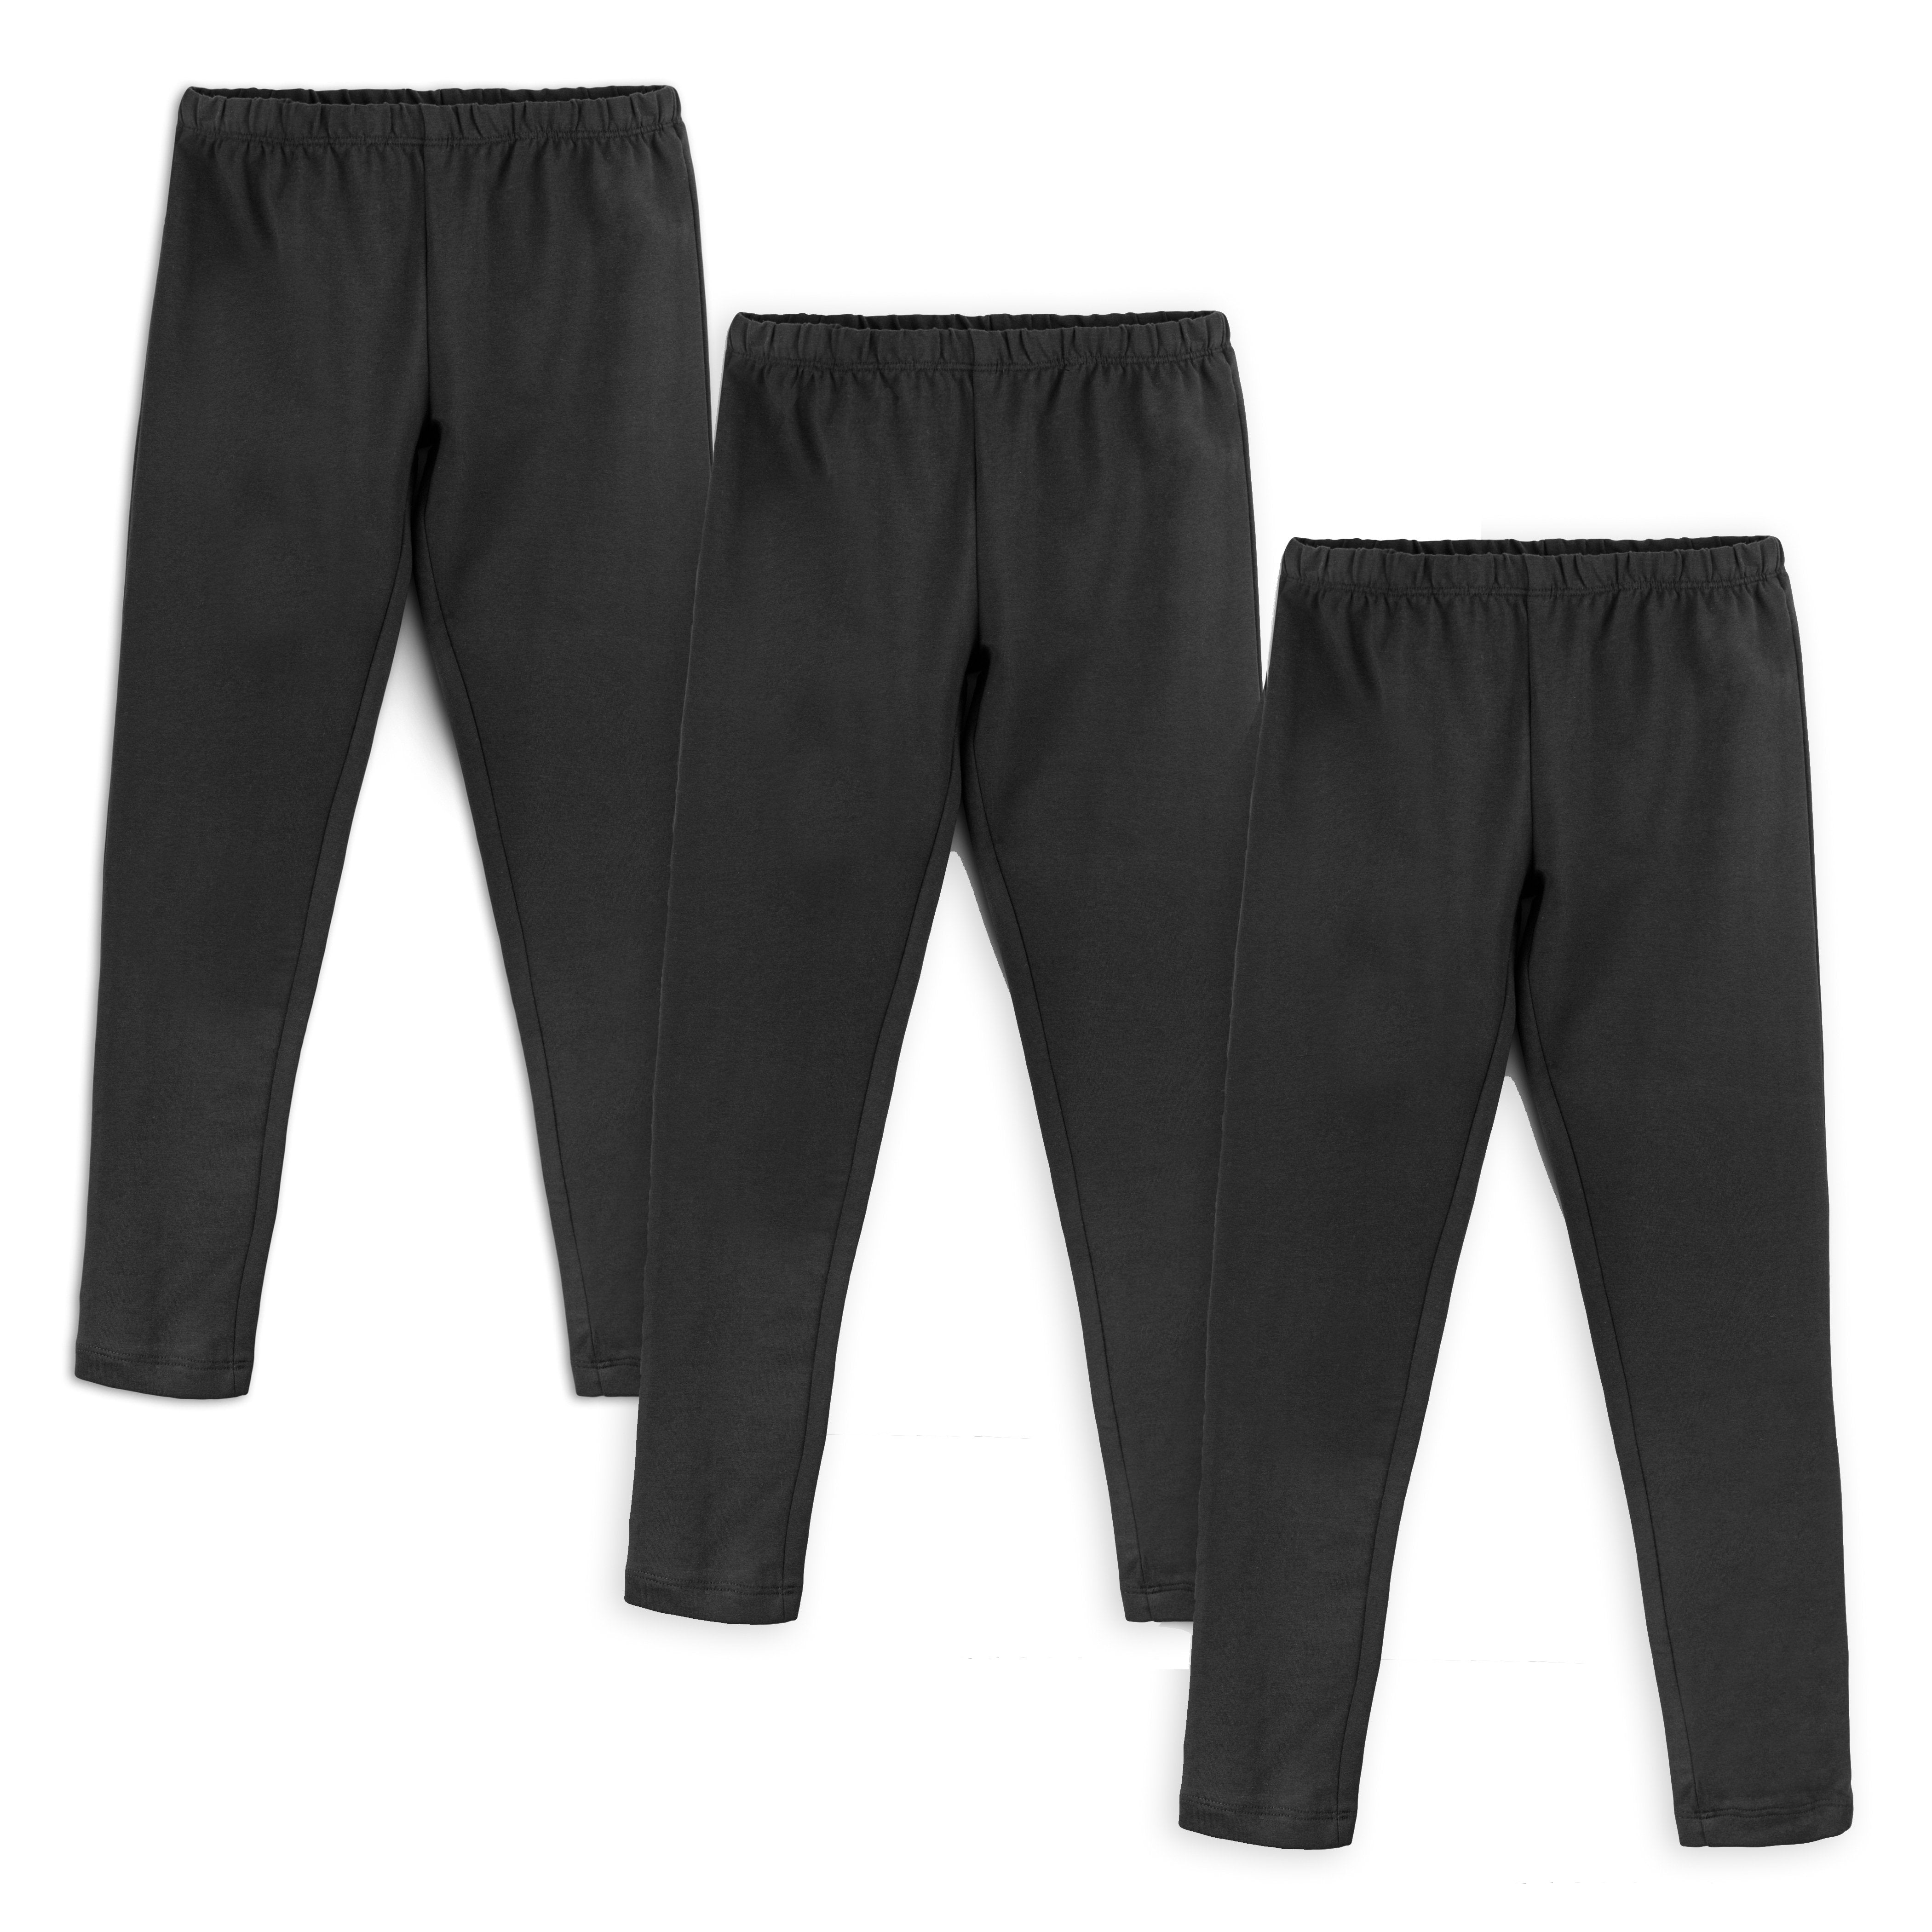 Attention women Legging Pants size L Black dressy Elastic Waist RN#4200 Pre  Own 